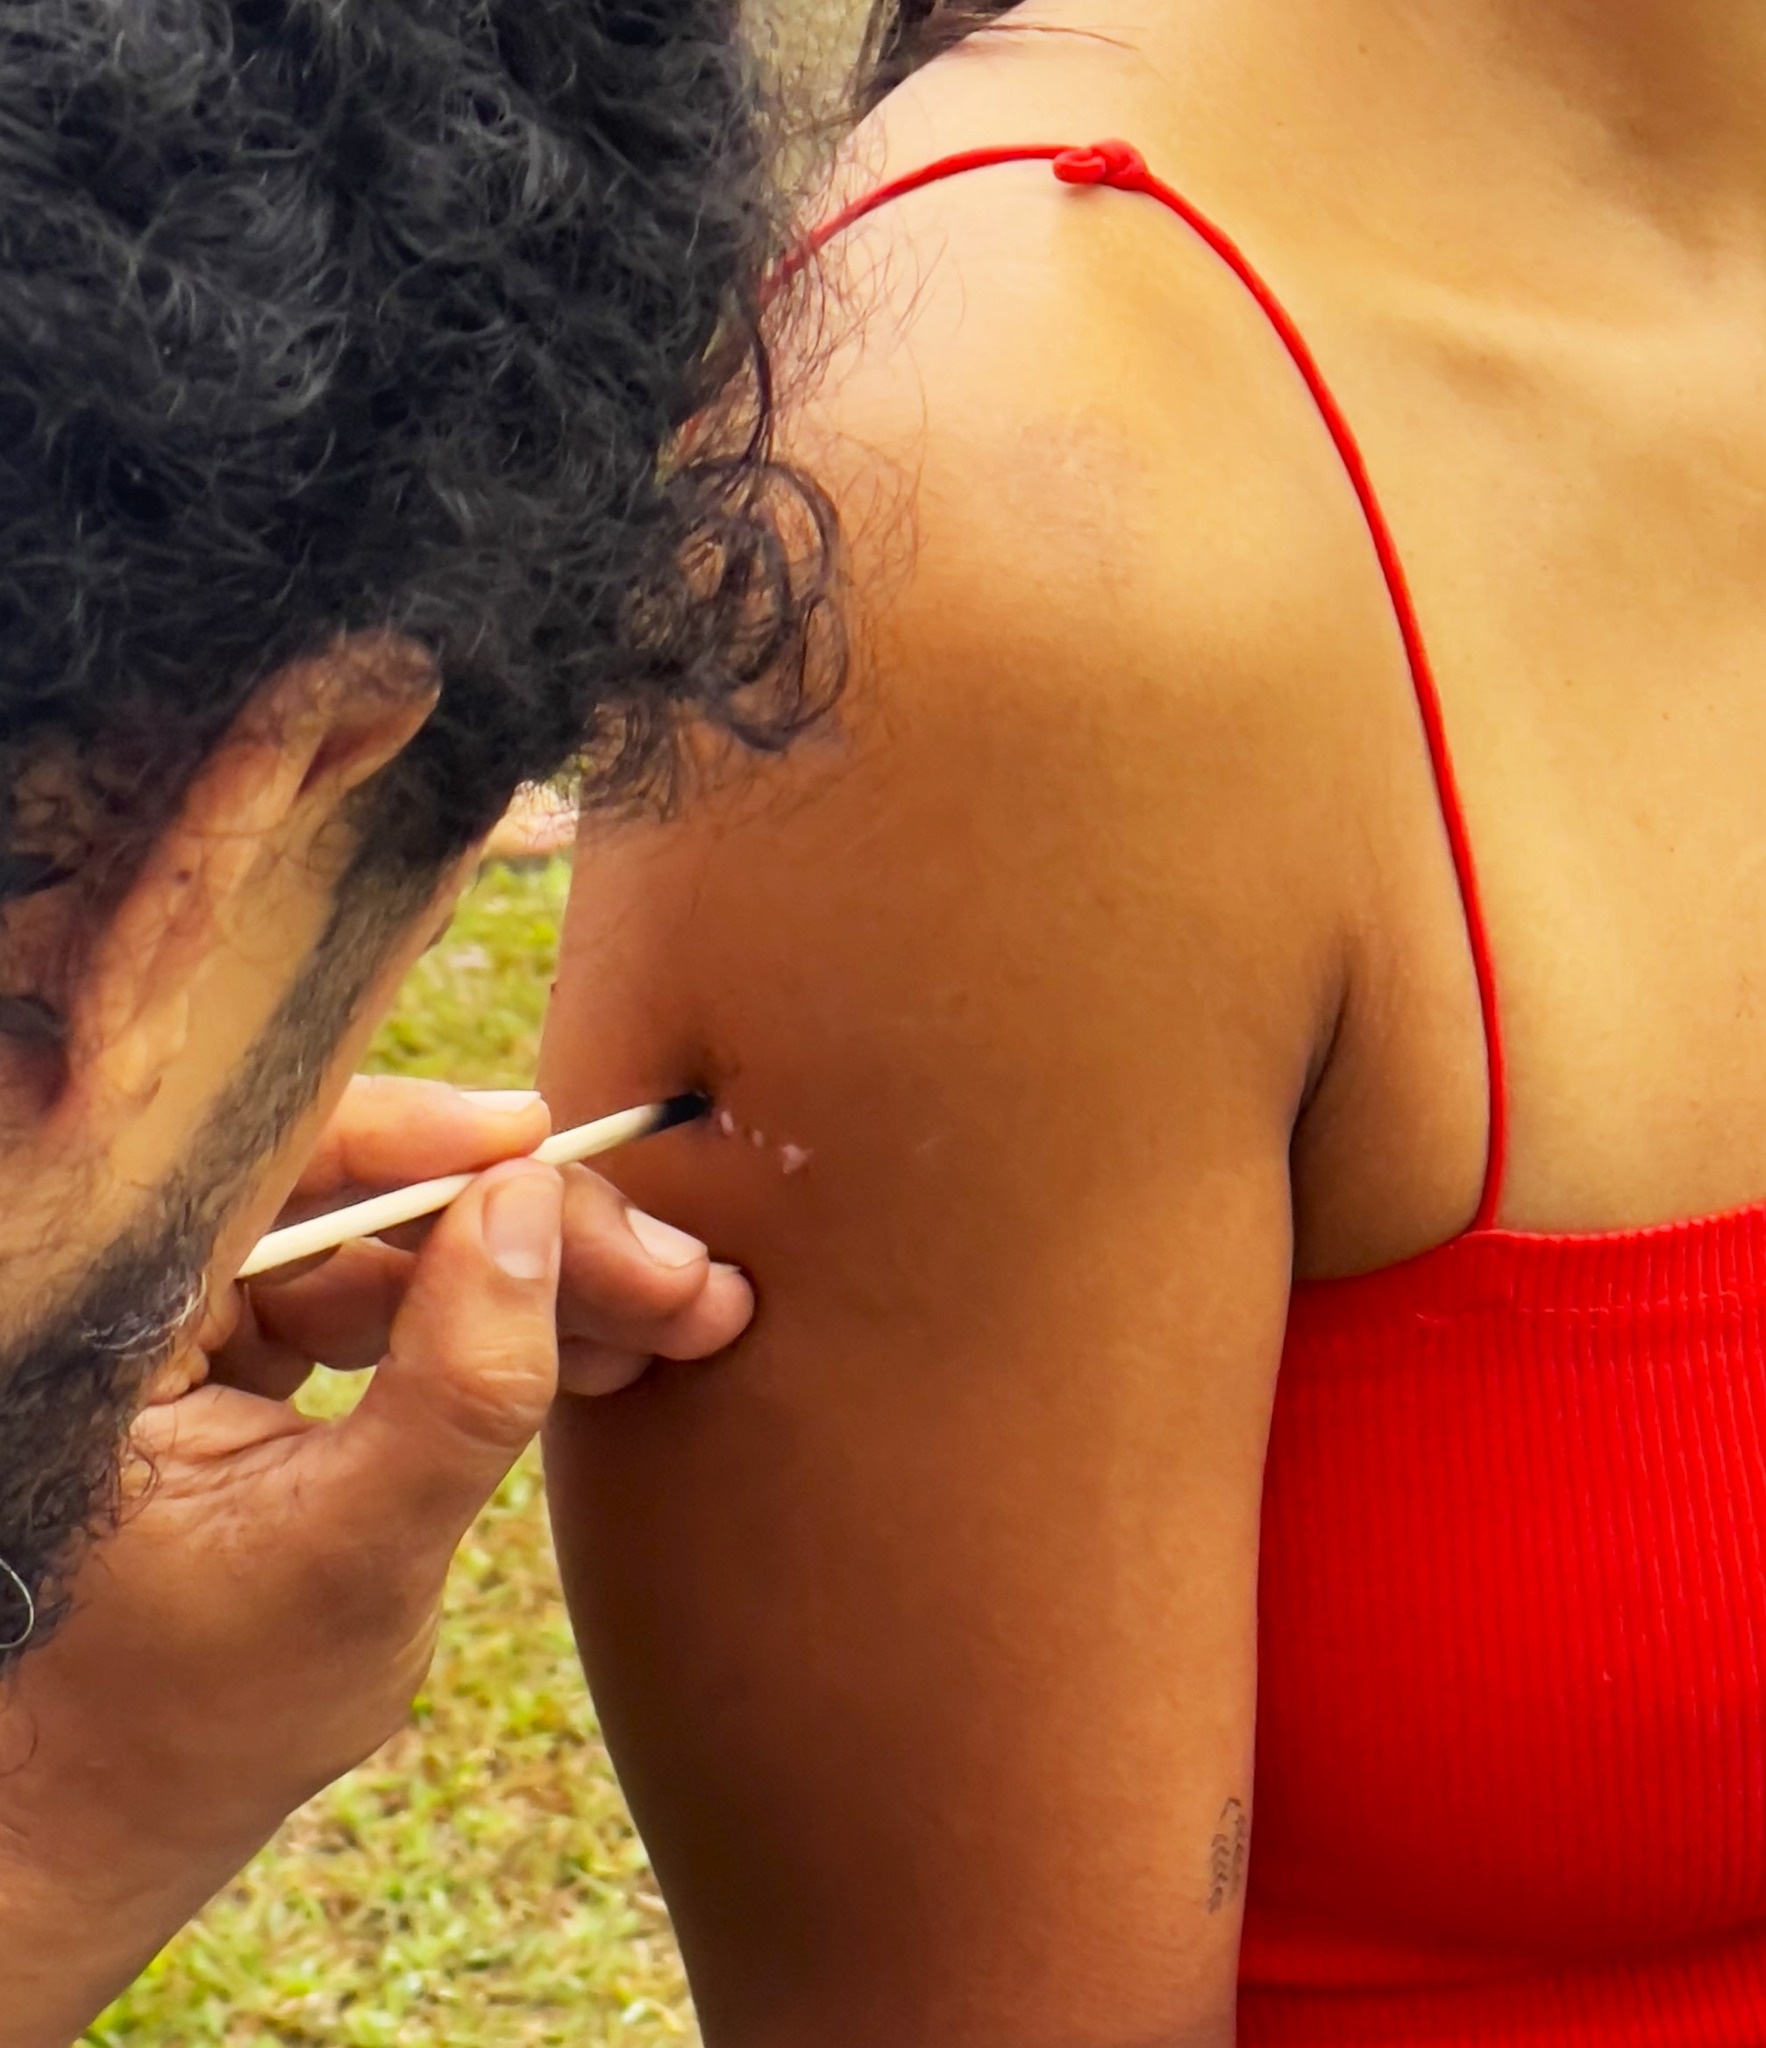 A facilitator inserts kambo or frog venom on a participant's skin